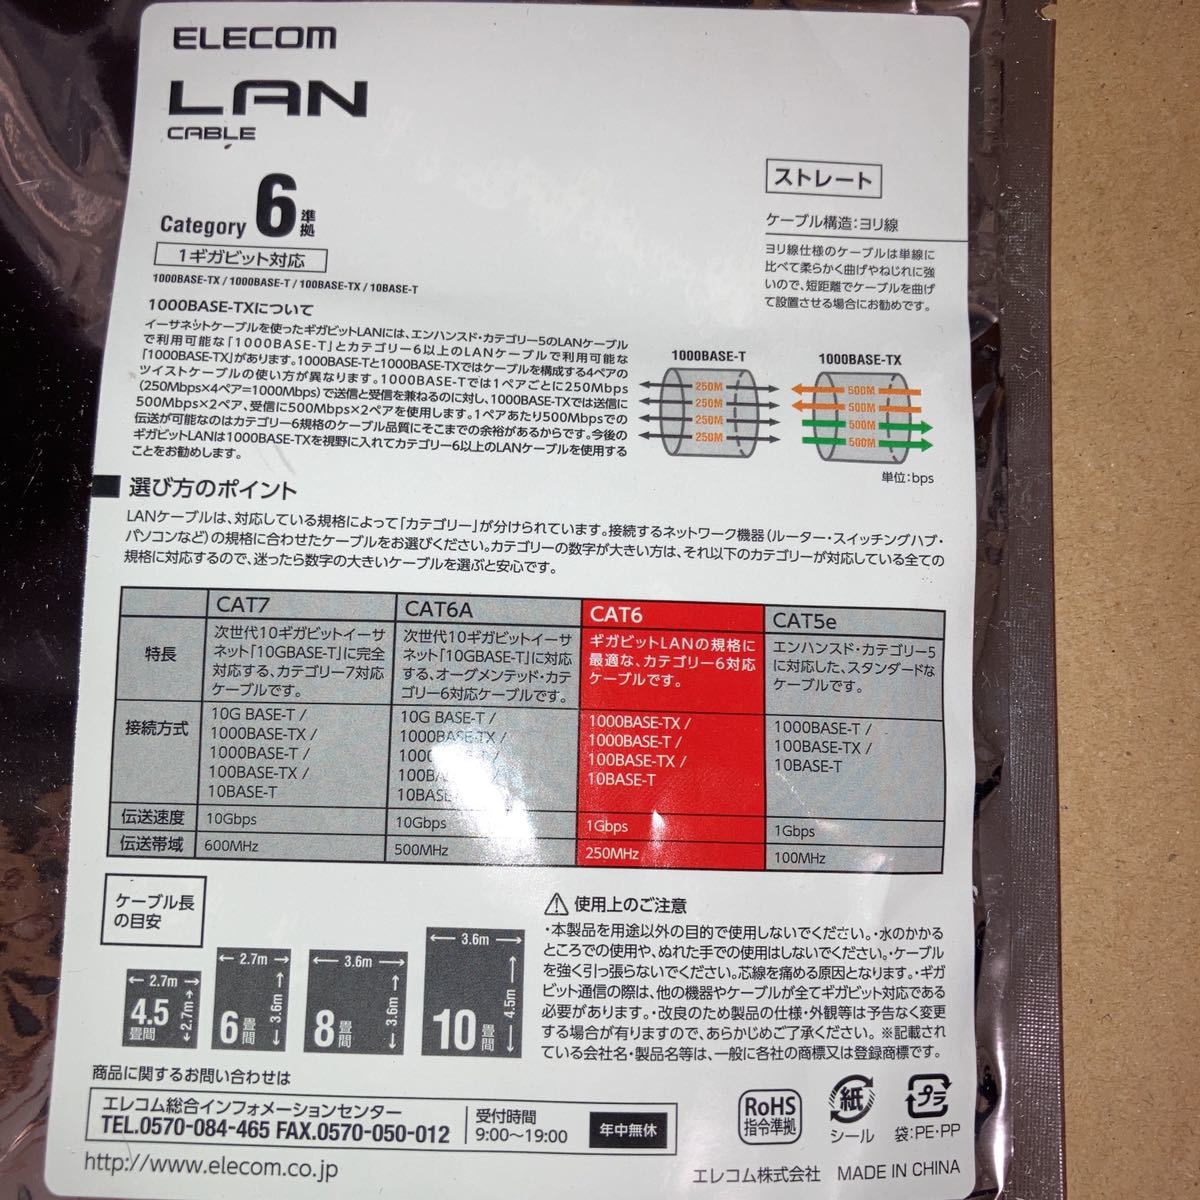 ELECOM エレコム LANケーブル ランケーブル カテゴリー6 cat6 対応 ツメ折れ防止 フラットケーブル 5m ホワイト LD-GFT/WH50 新品未開封